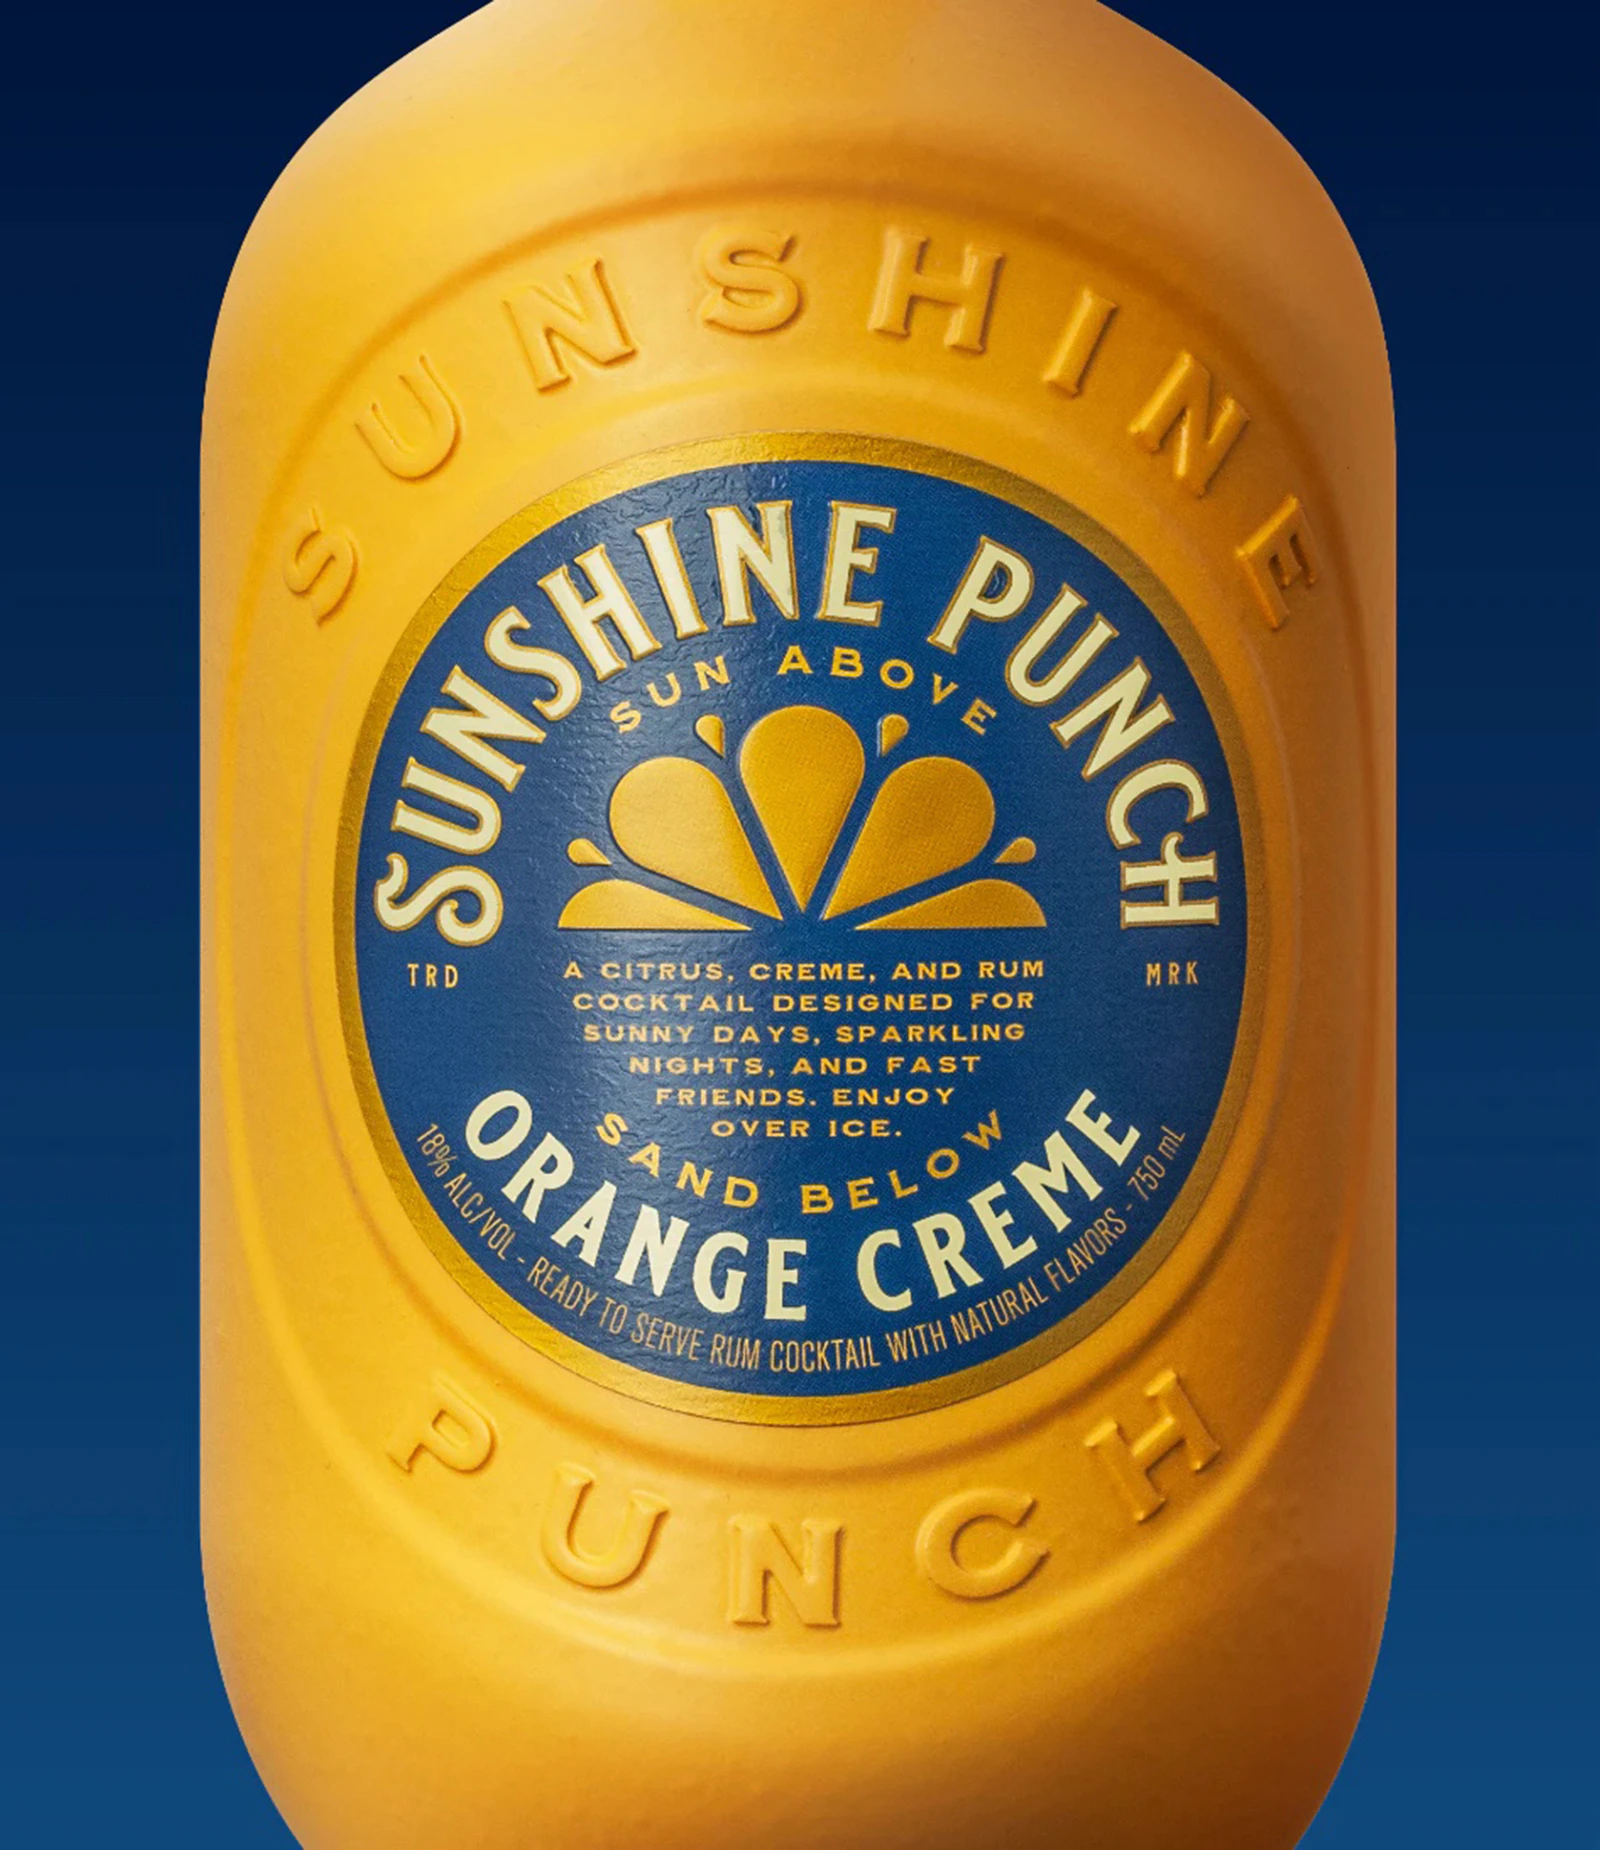 Closeup of orange and blue label on Sunshine Punch Orange Creme cocktail bottle on a blue background